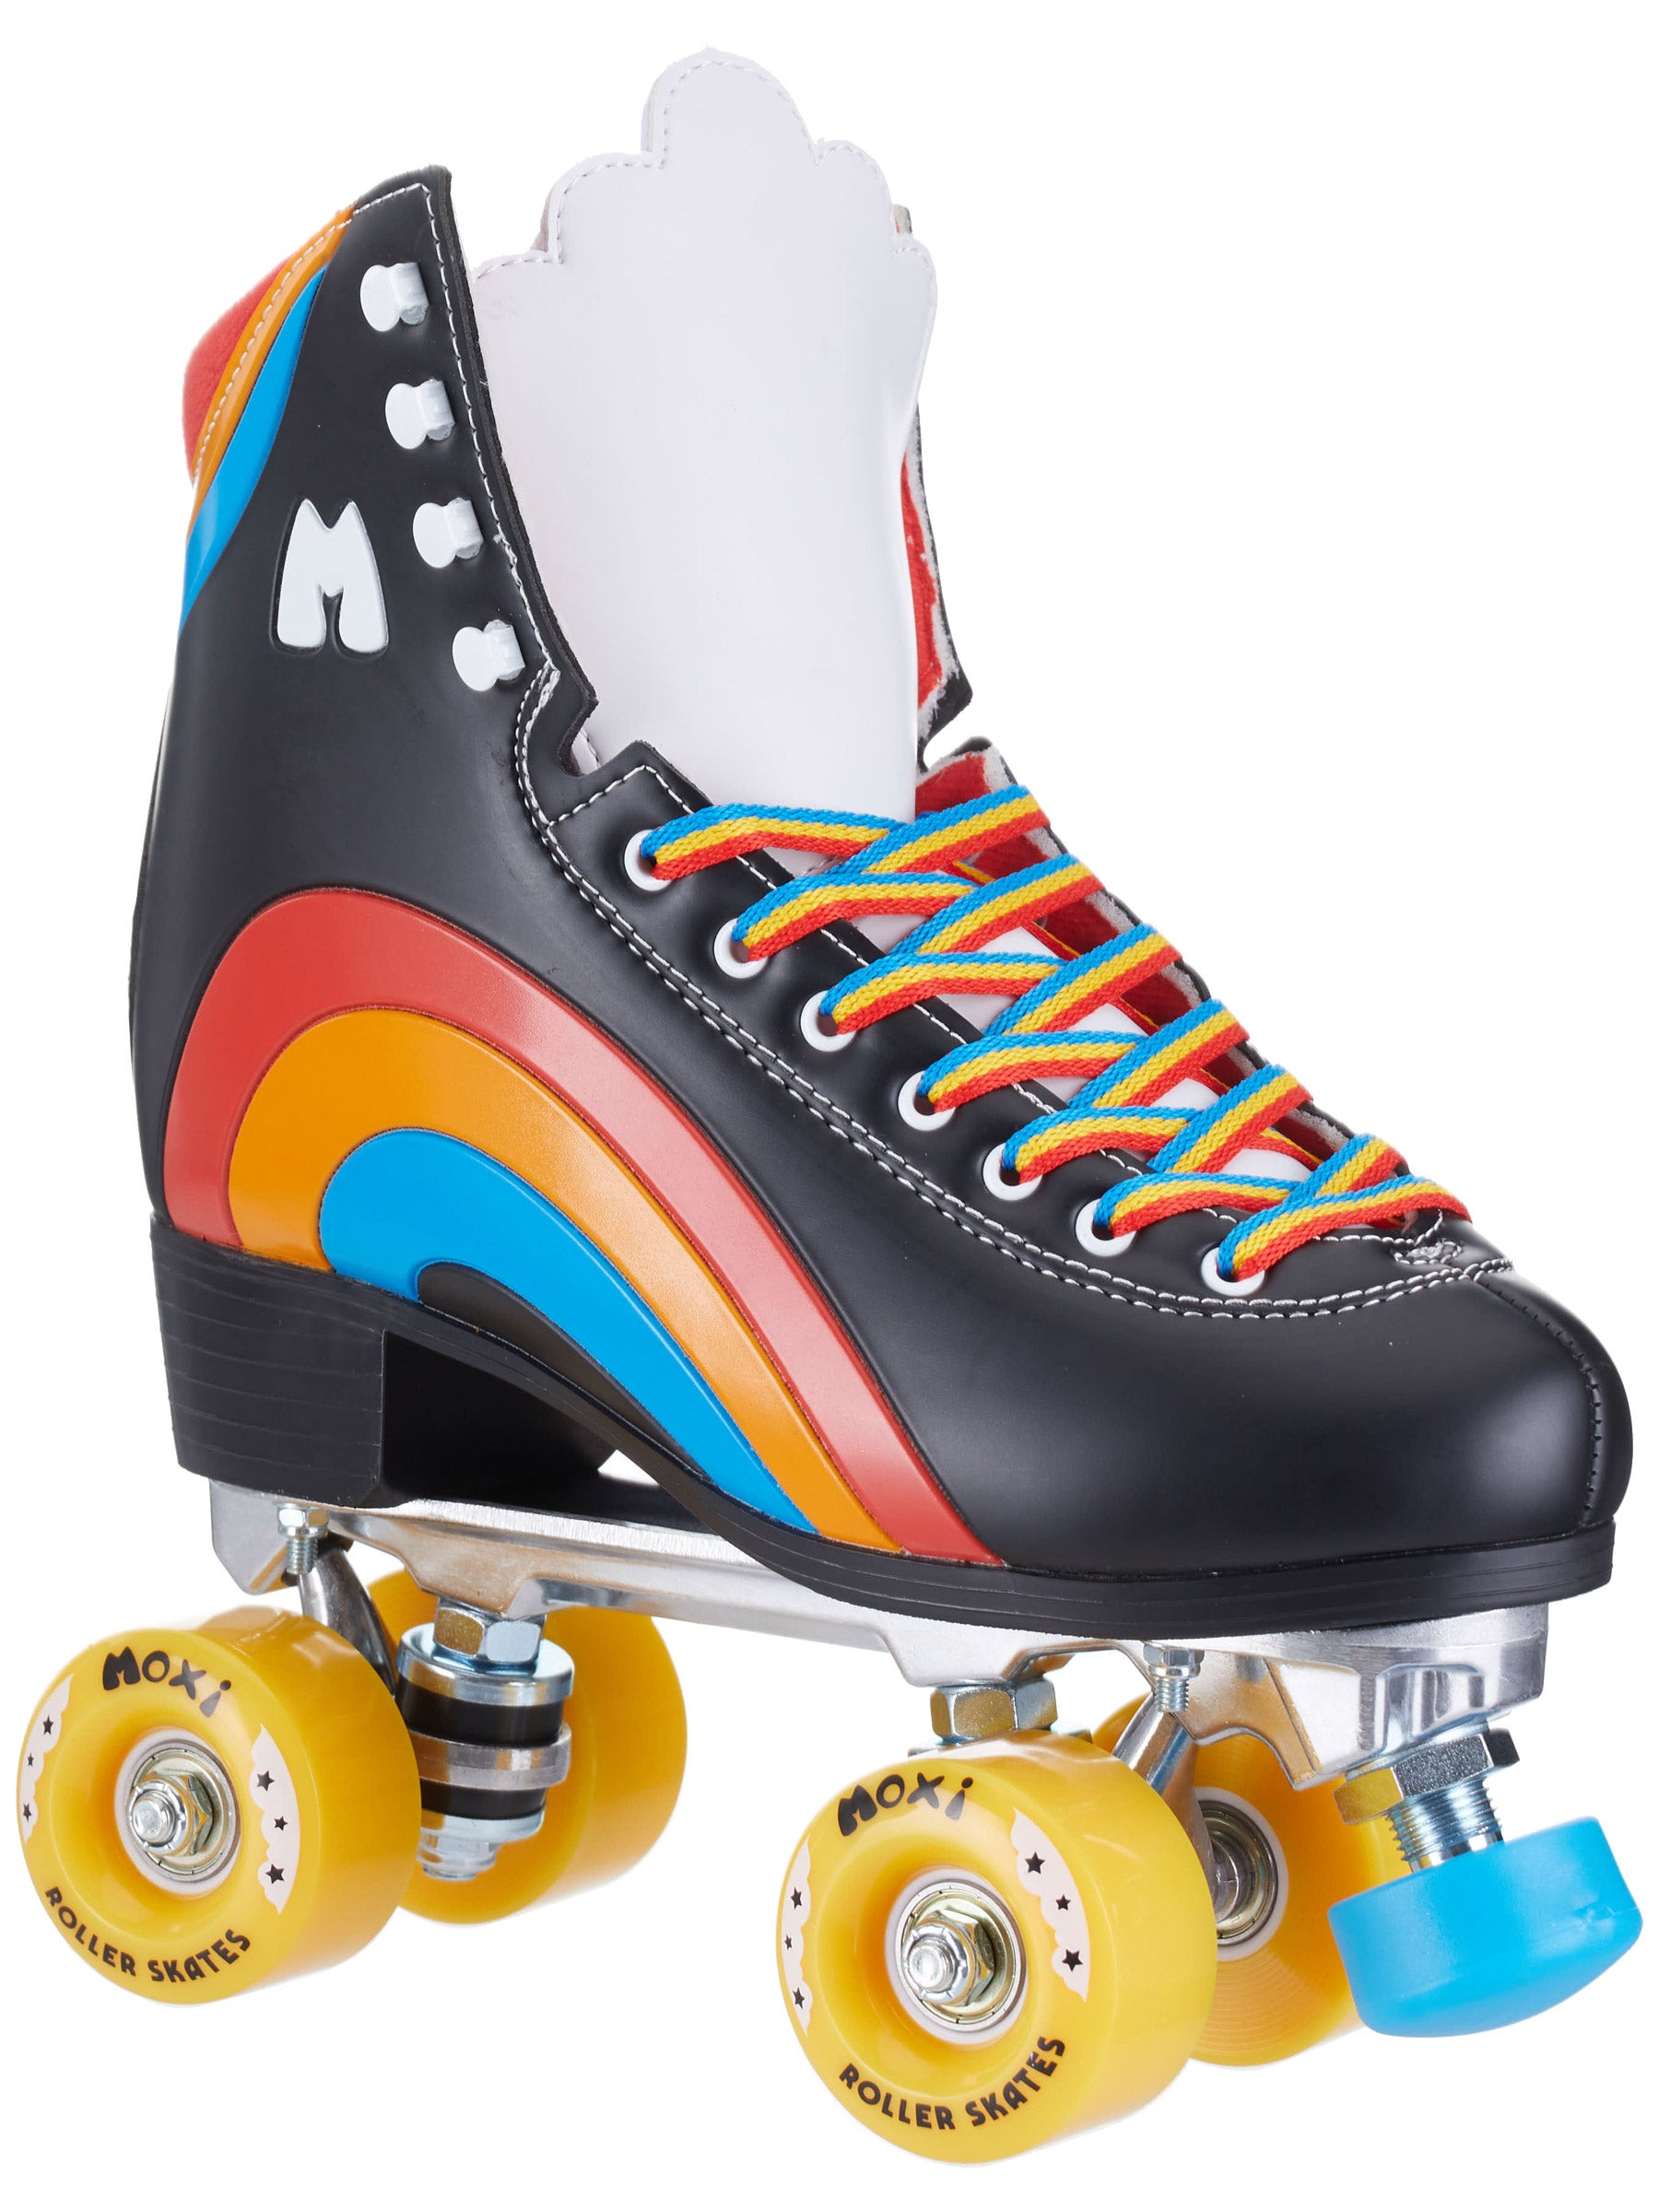 Moxi Rainbow Rider Roller Skates Black Size 6 Fits Women's Size 7 Hybrid Wheels 